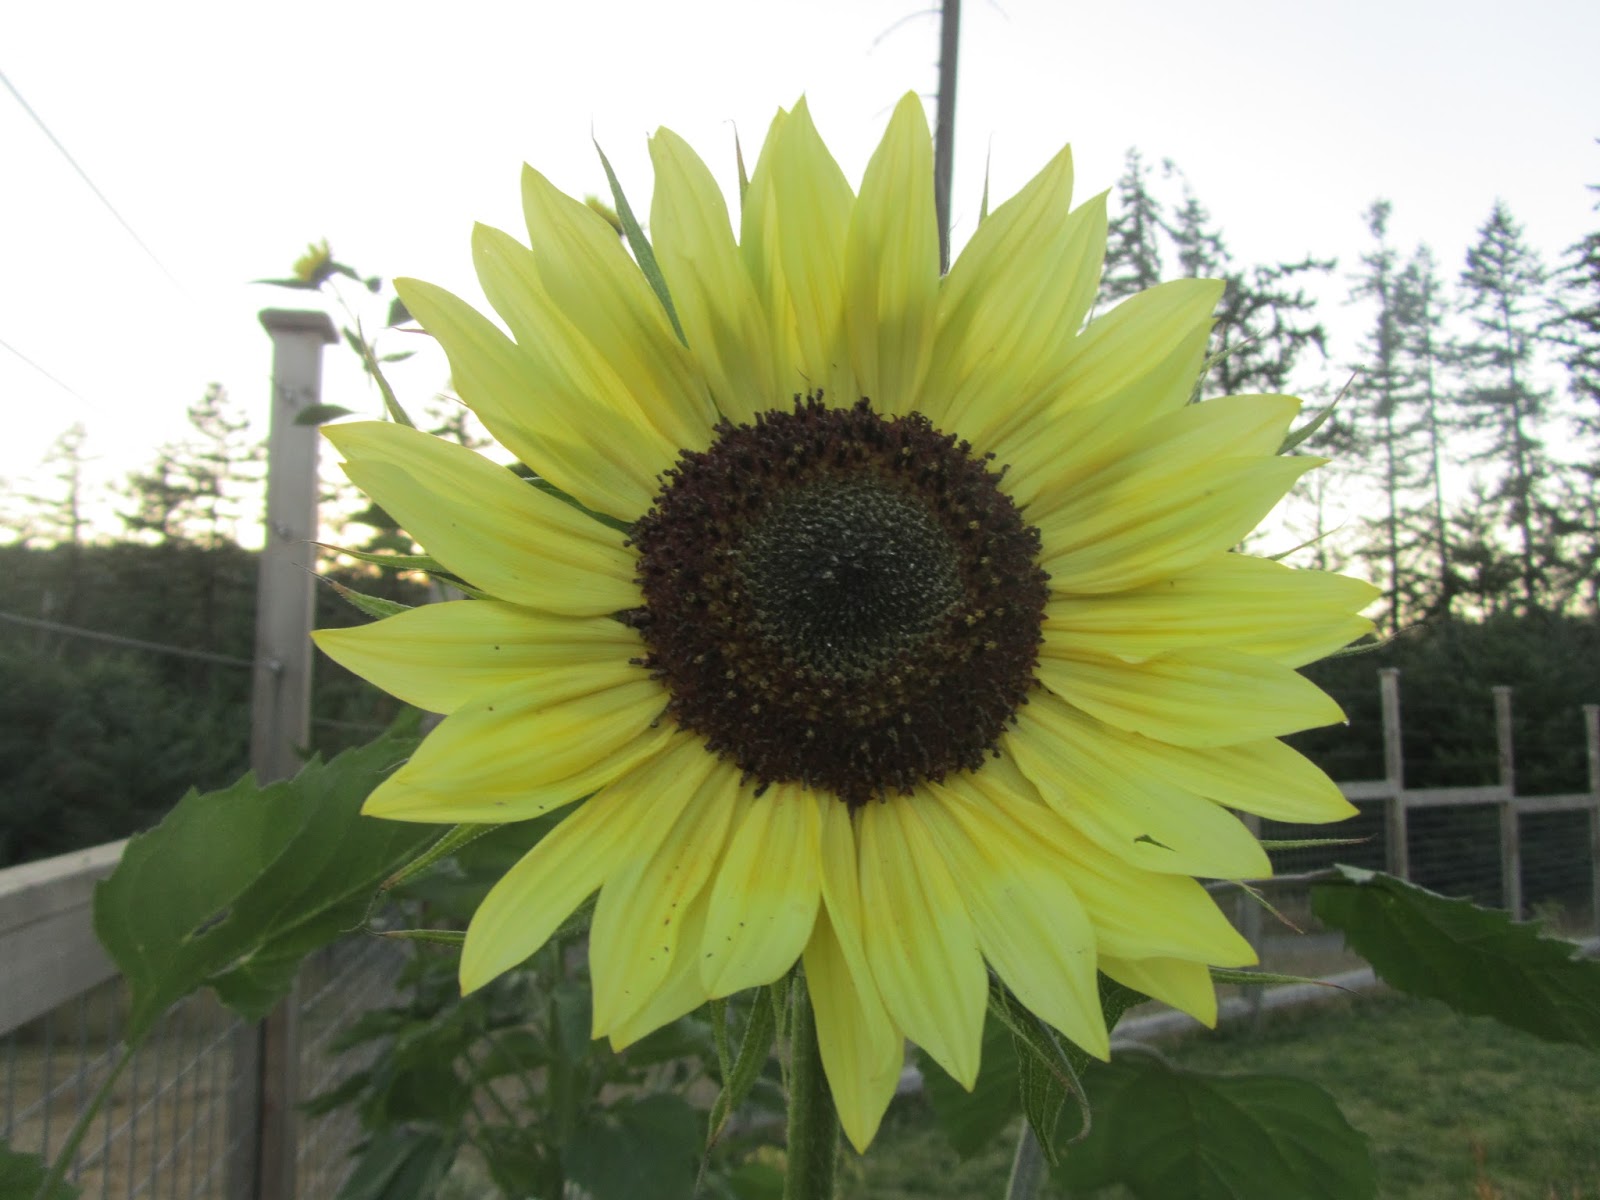 Four Hills of Squash: Giant Primrose Sunflower